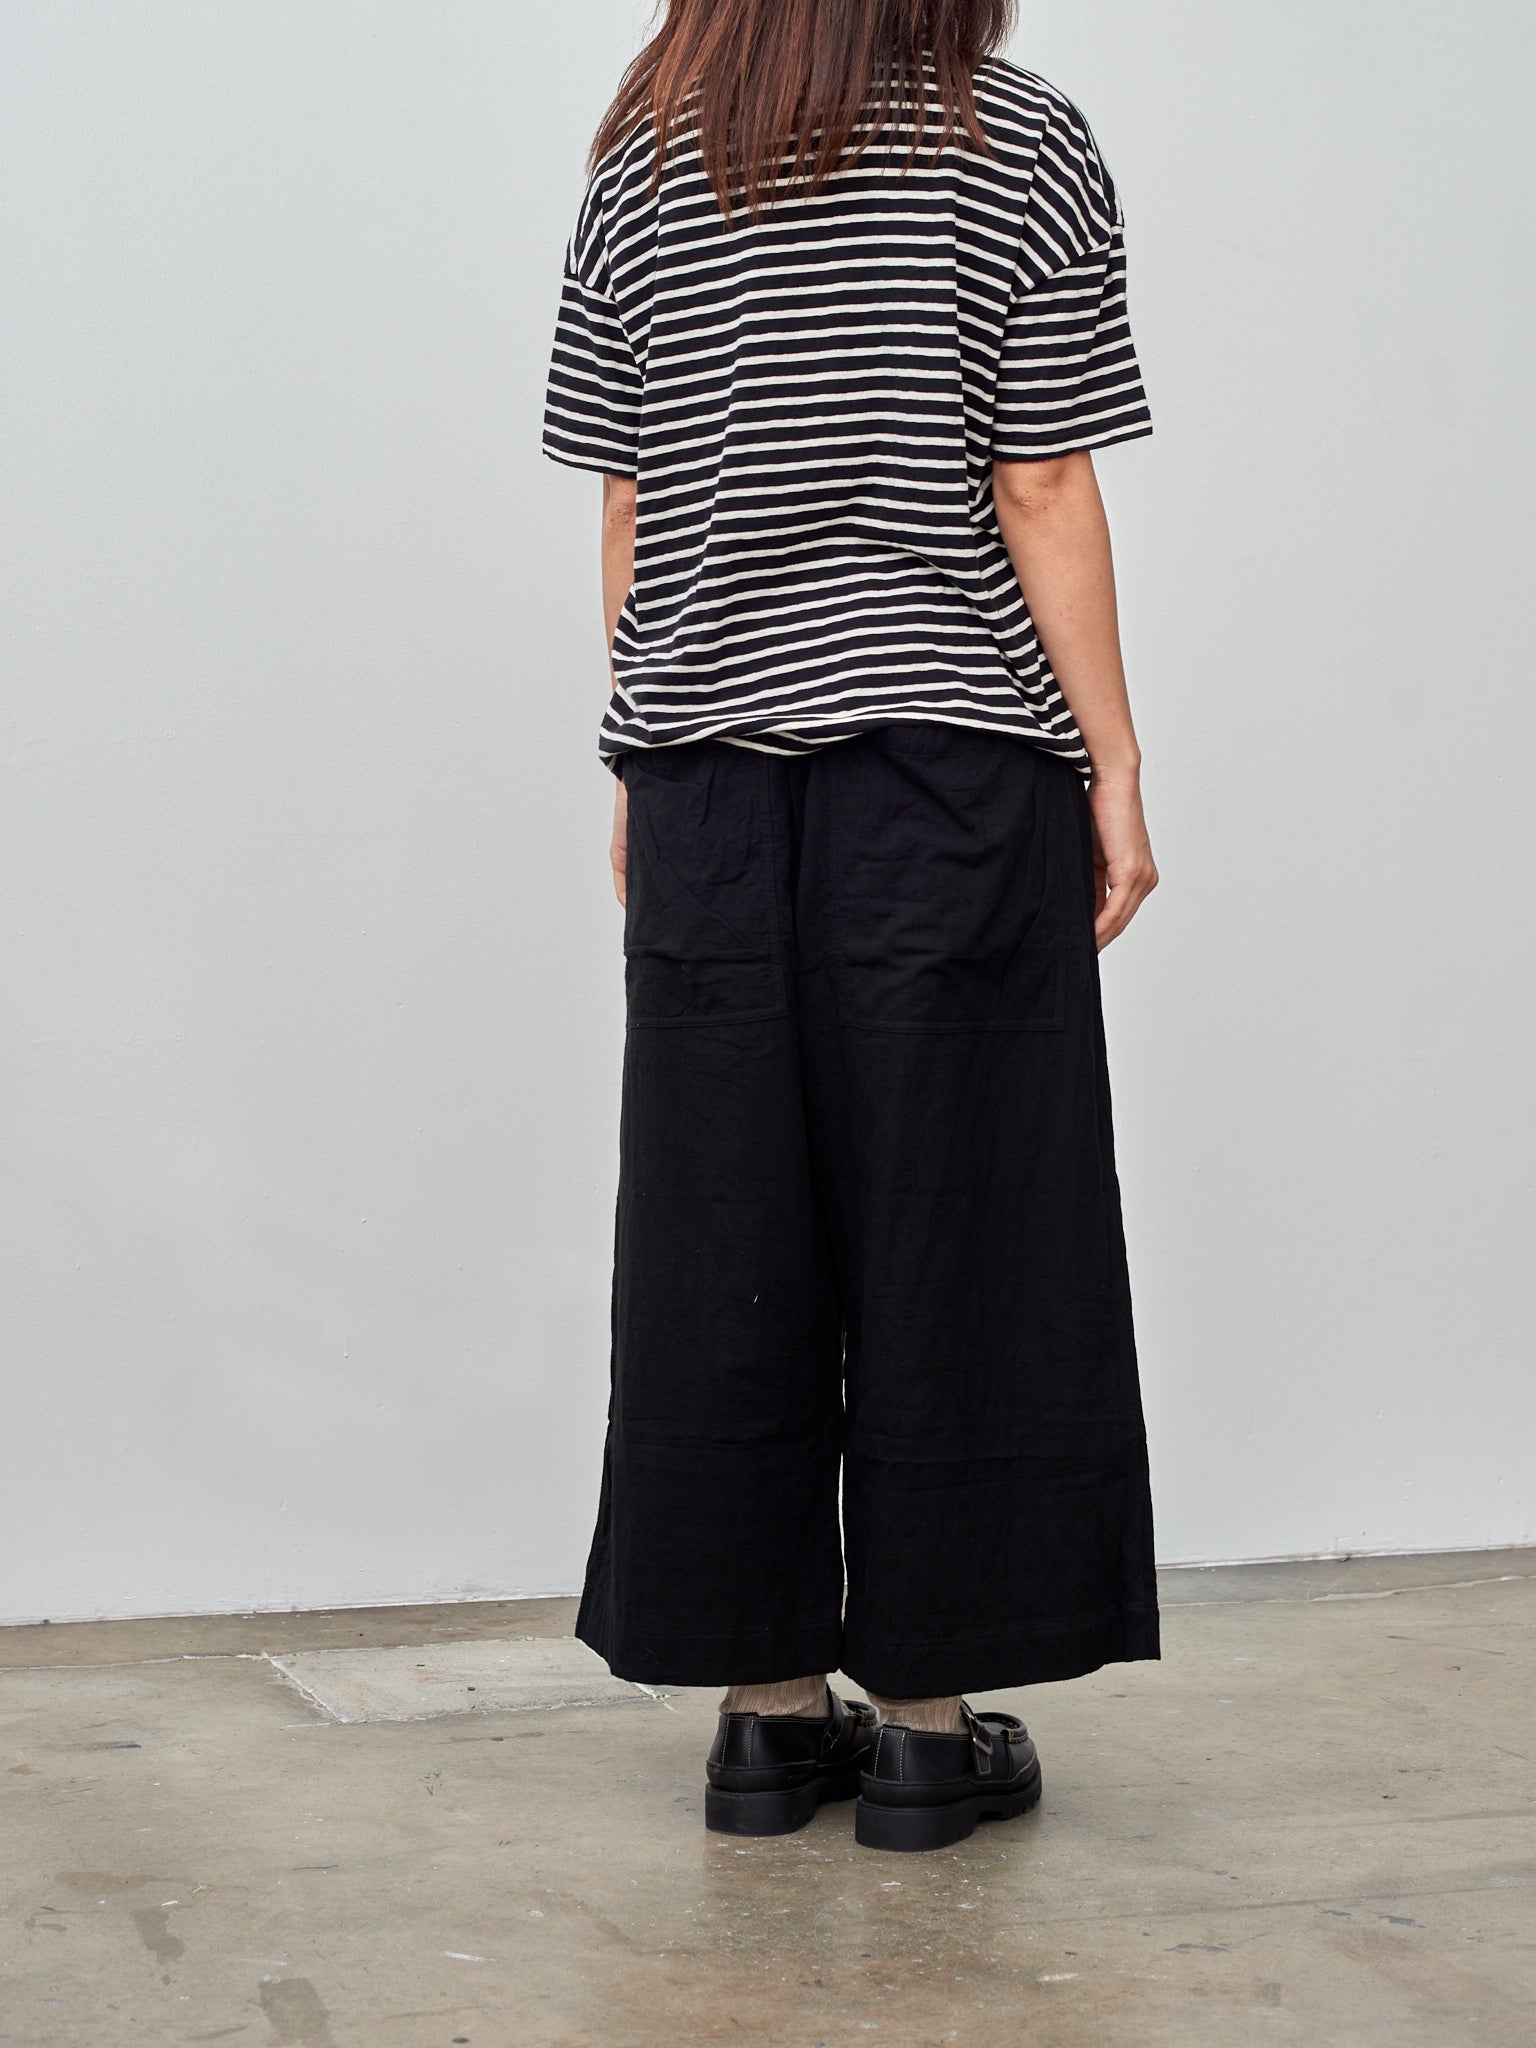 Namu Shop - Ichi Stripe T-Shirt  - Black/Natural